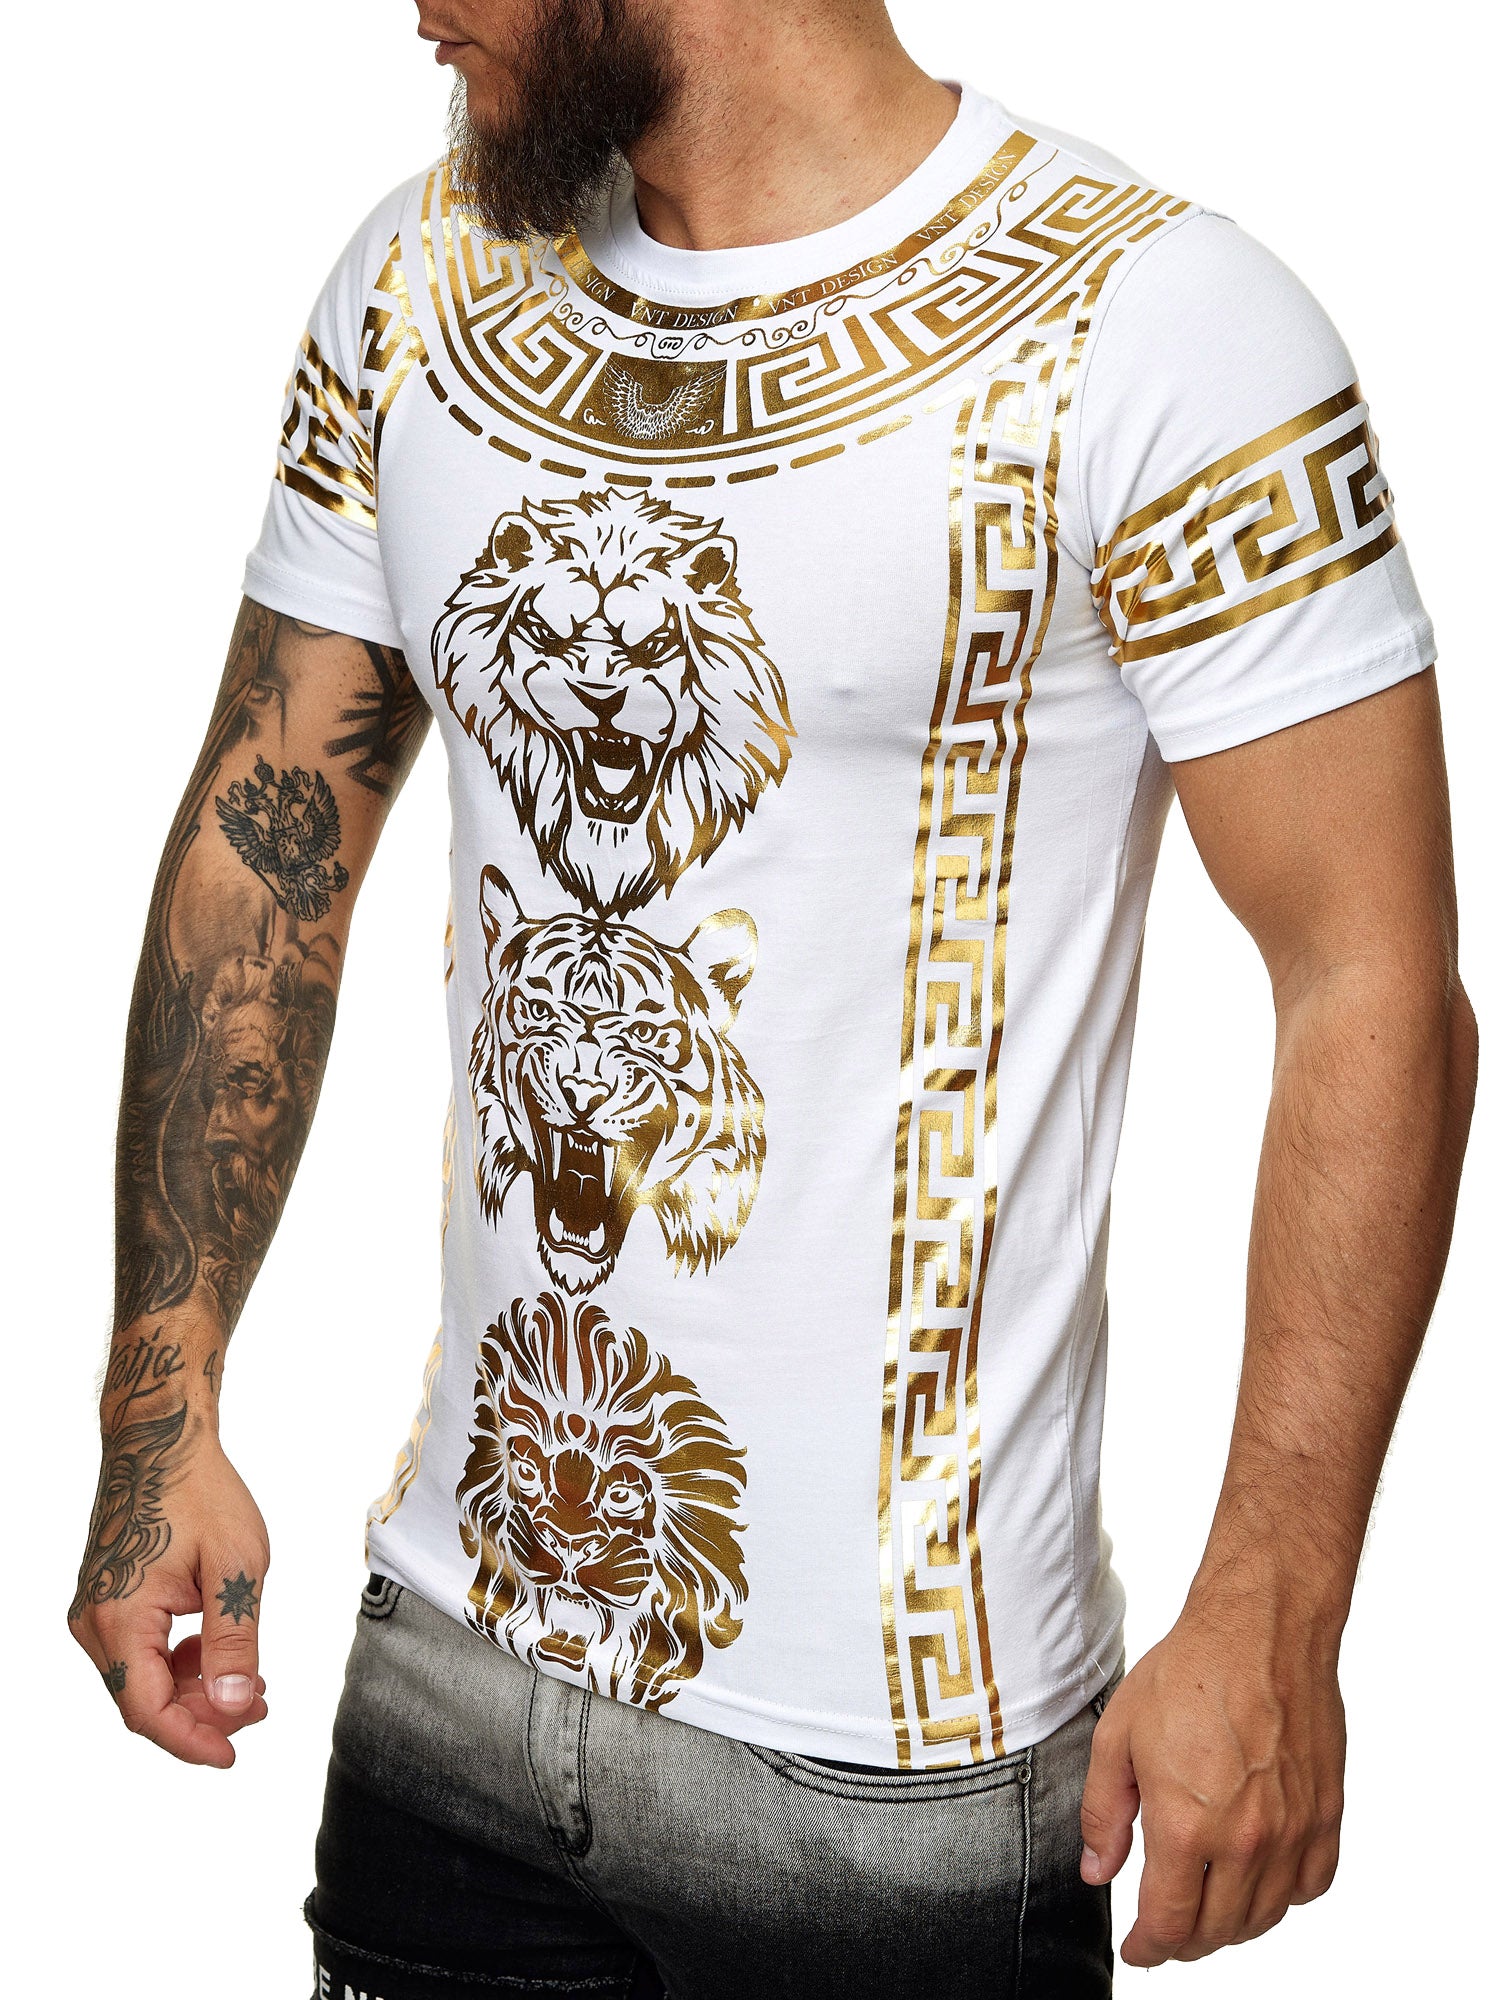 Falion Graphic T-Shirt - White Gold X52B - FASH STOP